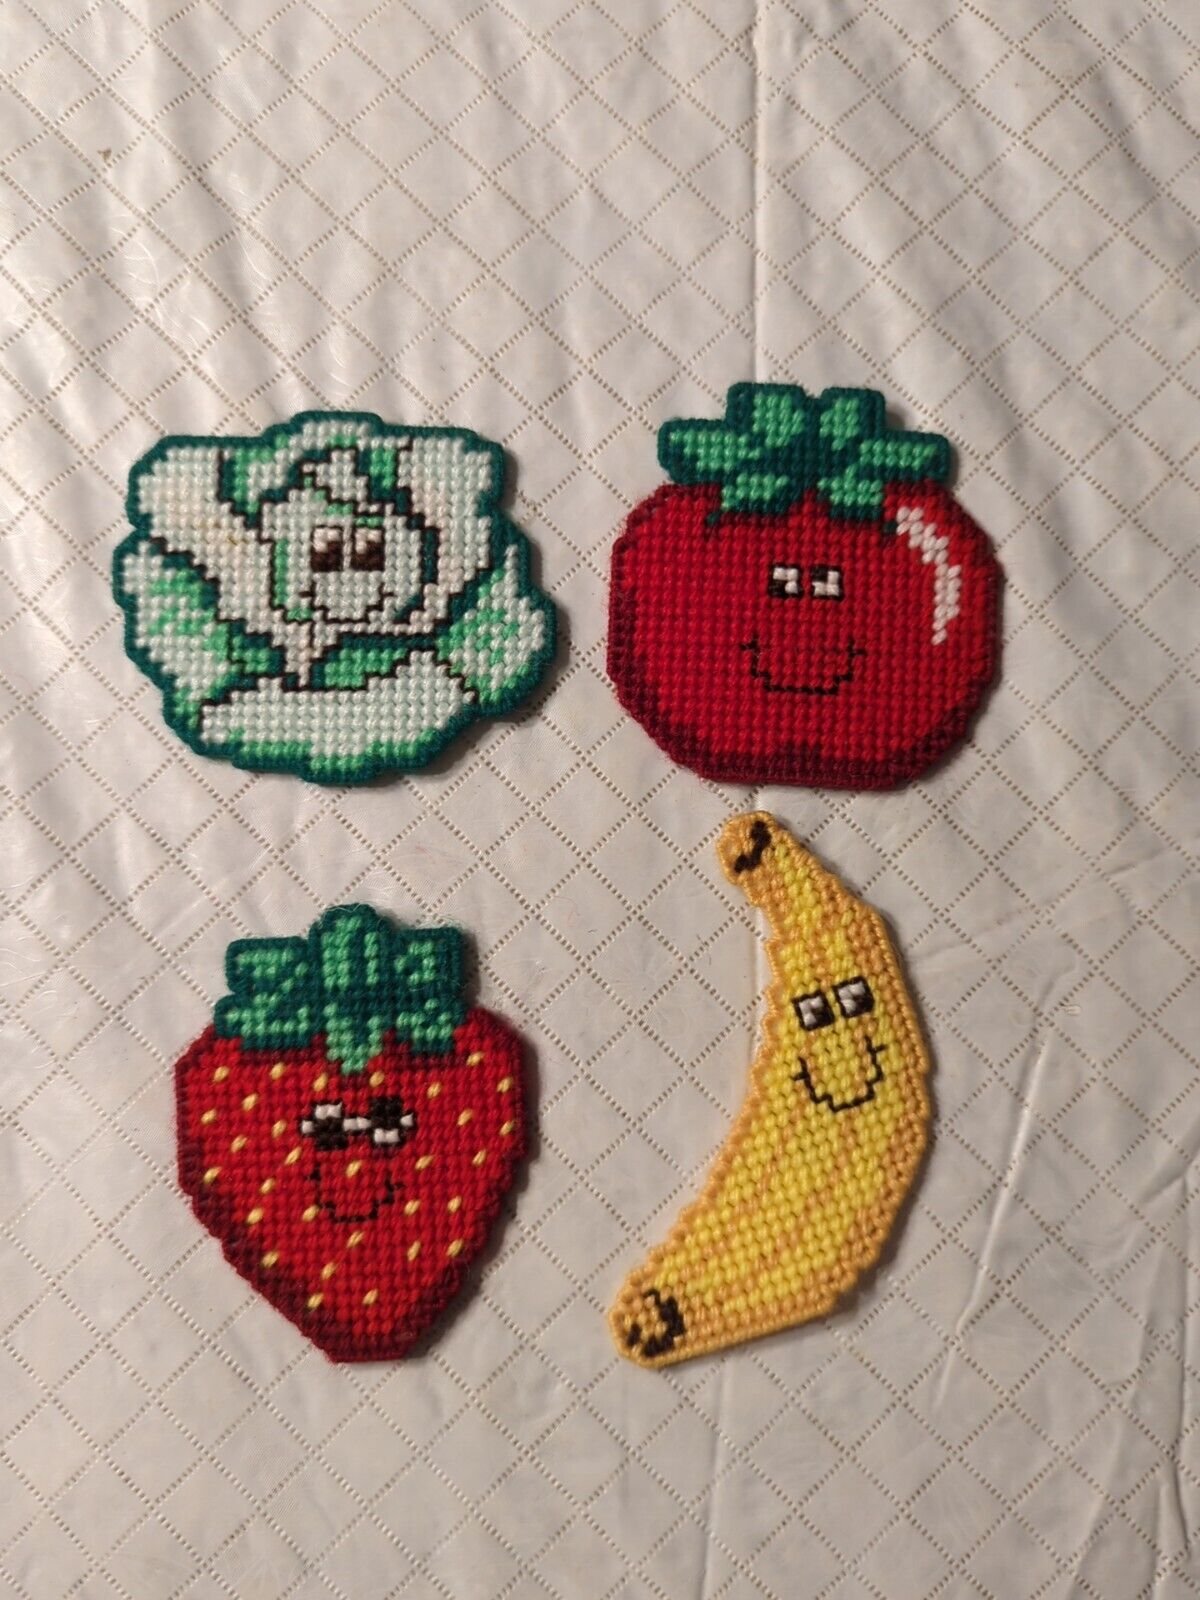 4 Handmade Fruit/ Vegetable Refrigerator Magnets